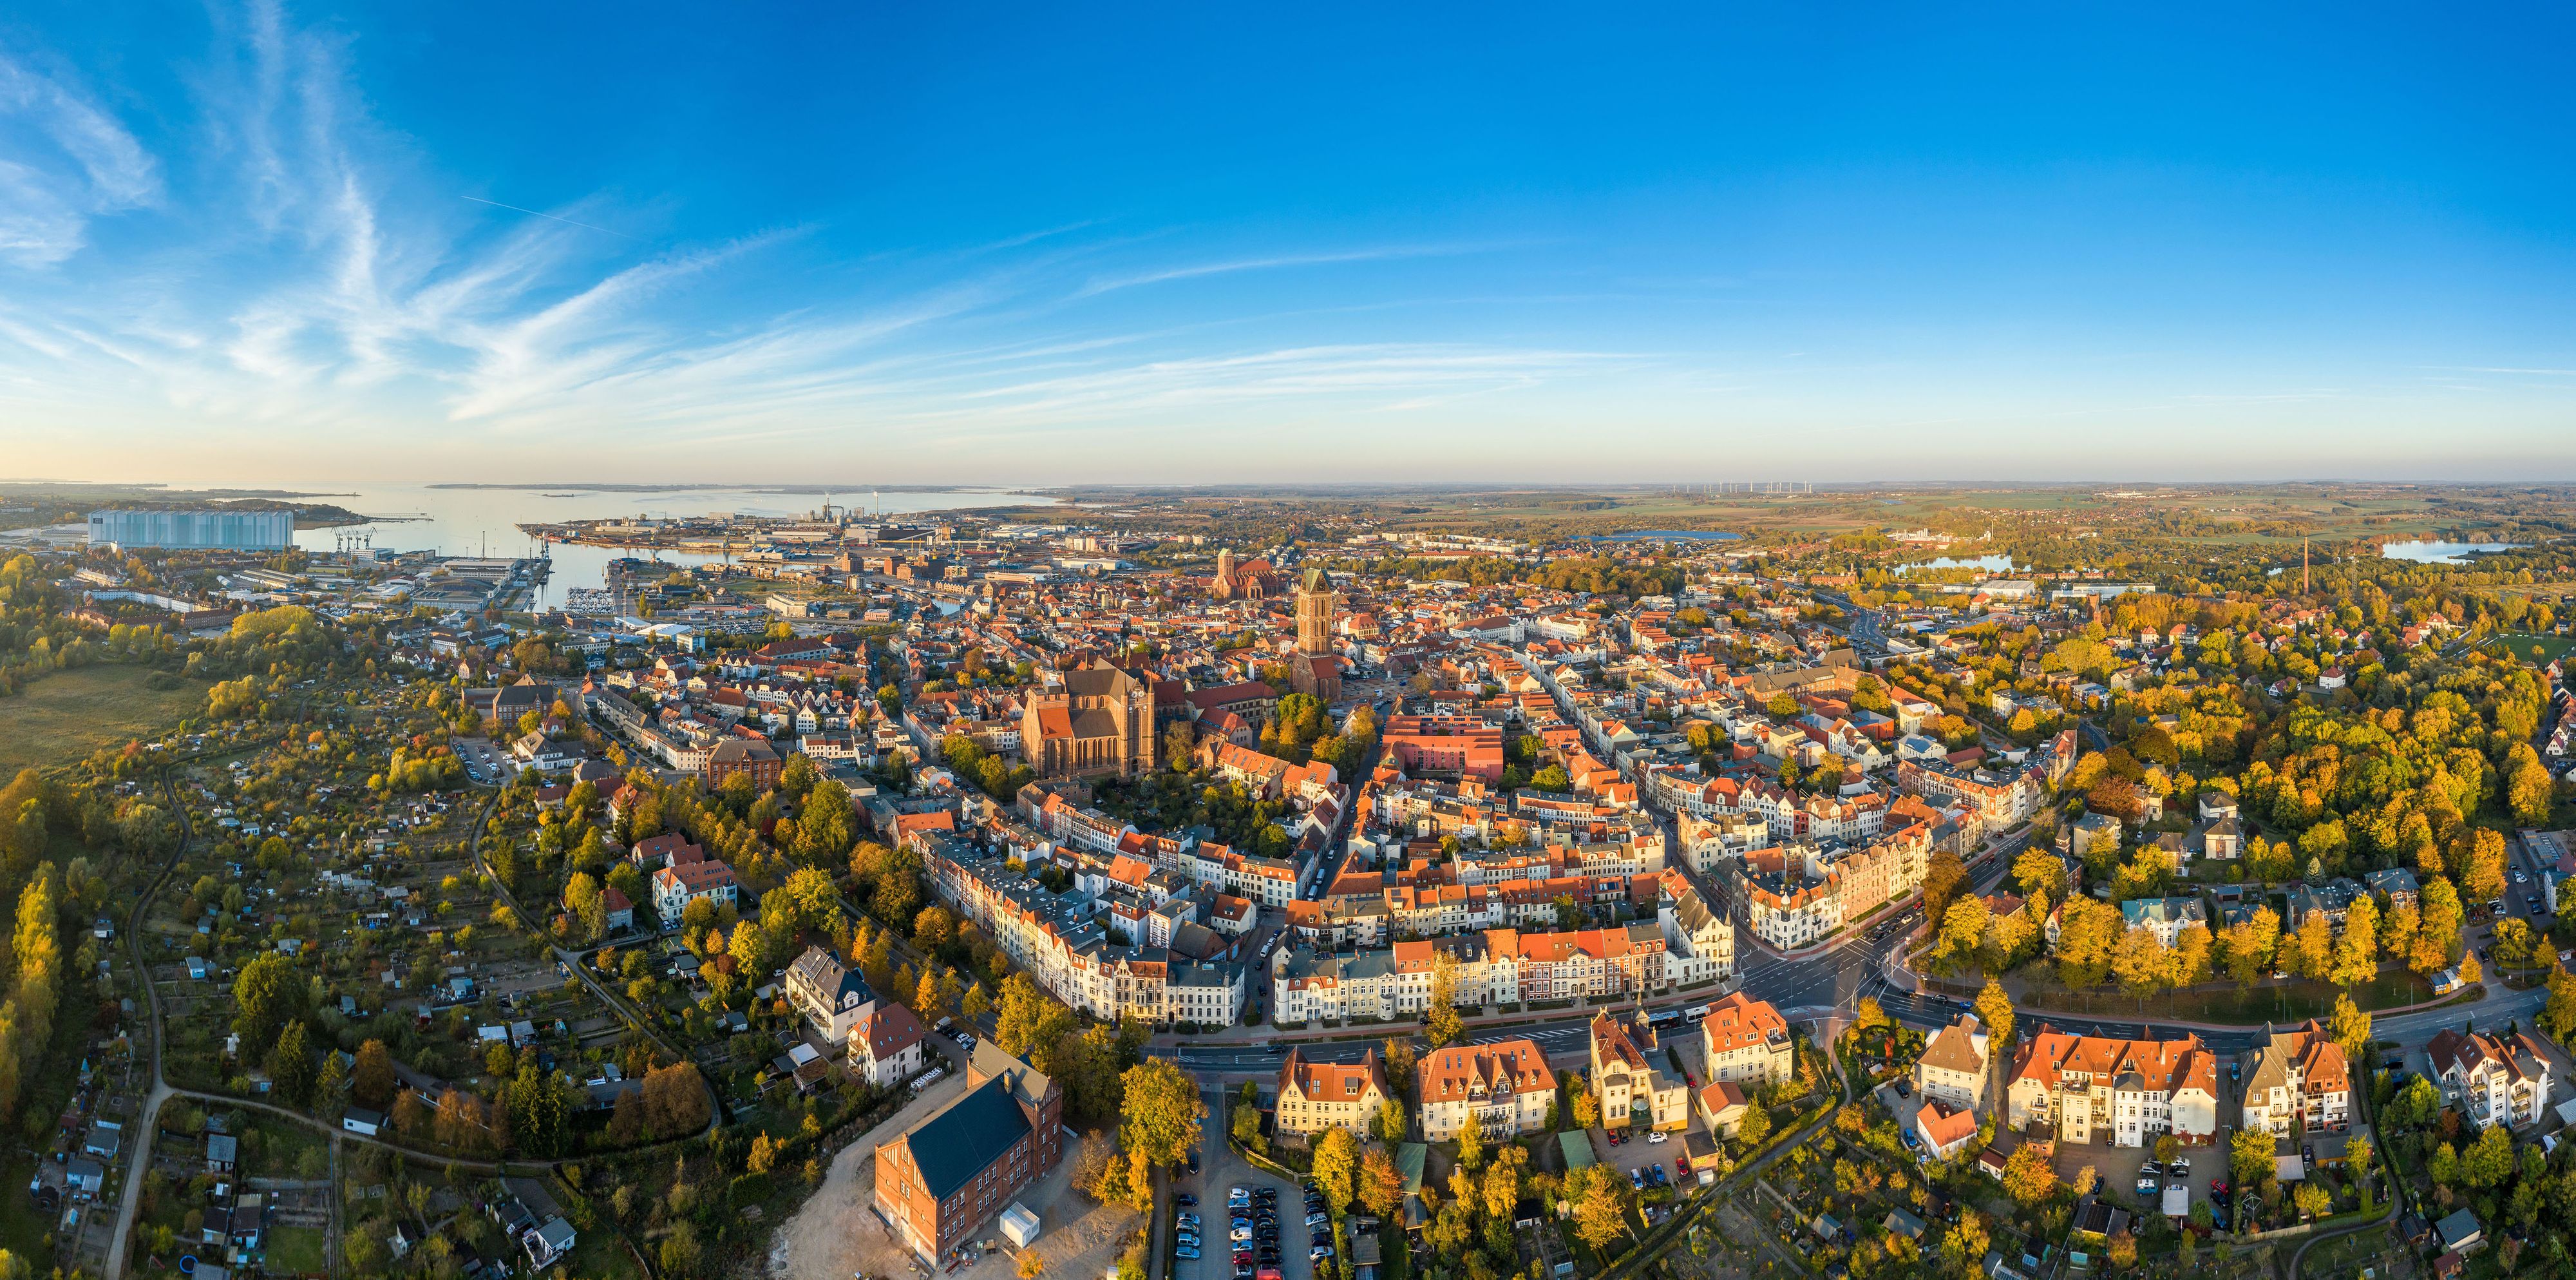 Beeindruckender Panoramablick: Die Altstadt der Hansestadt Wismar gehört seit 2002 zum Unesco-Welterbe.&nbsp; Foto: djd/www.wismar.de/Maignpix